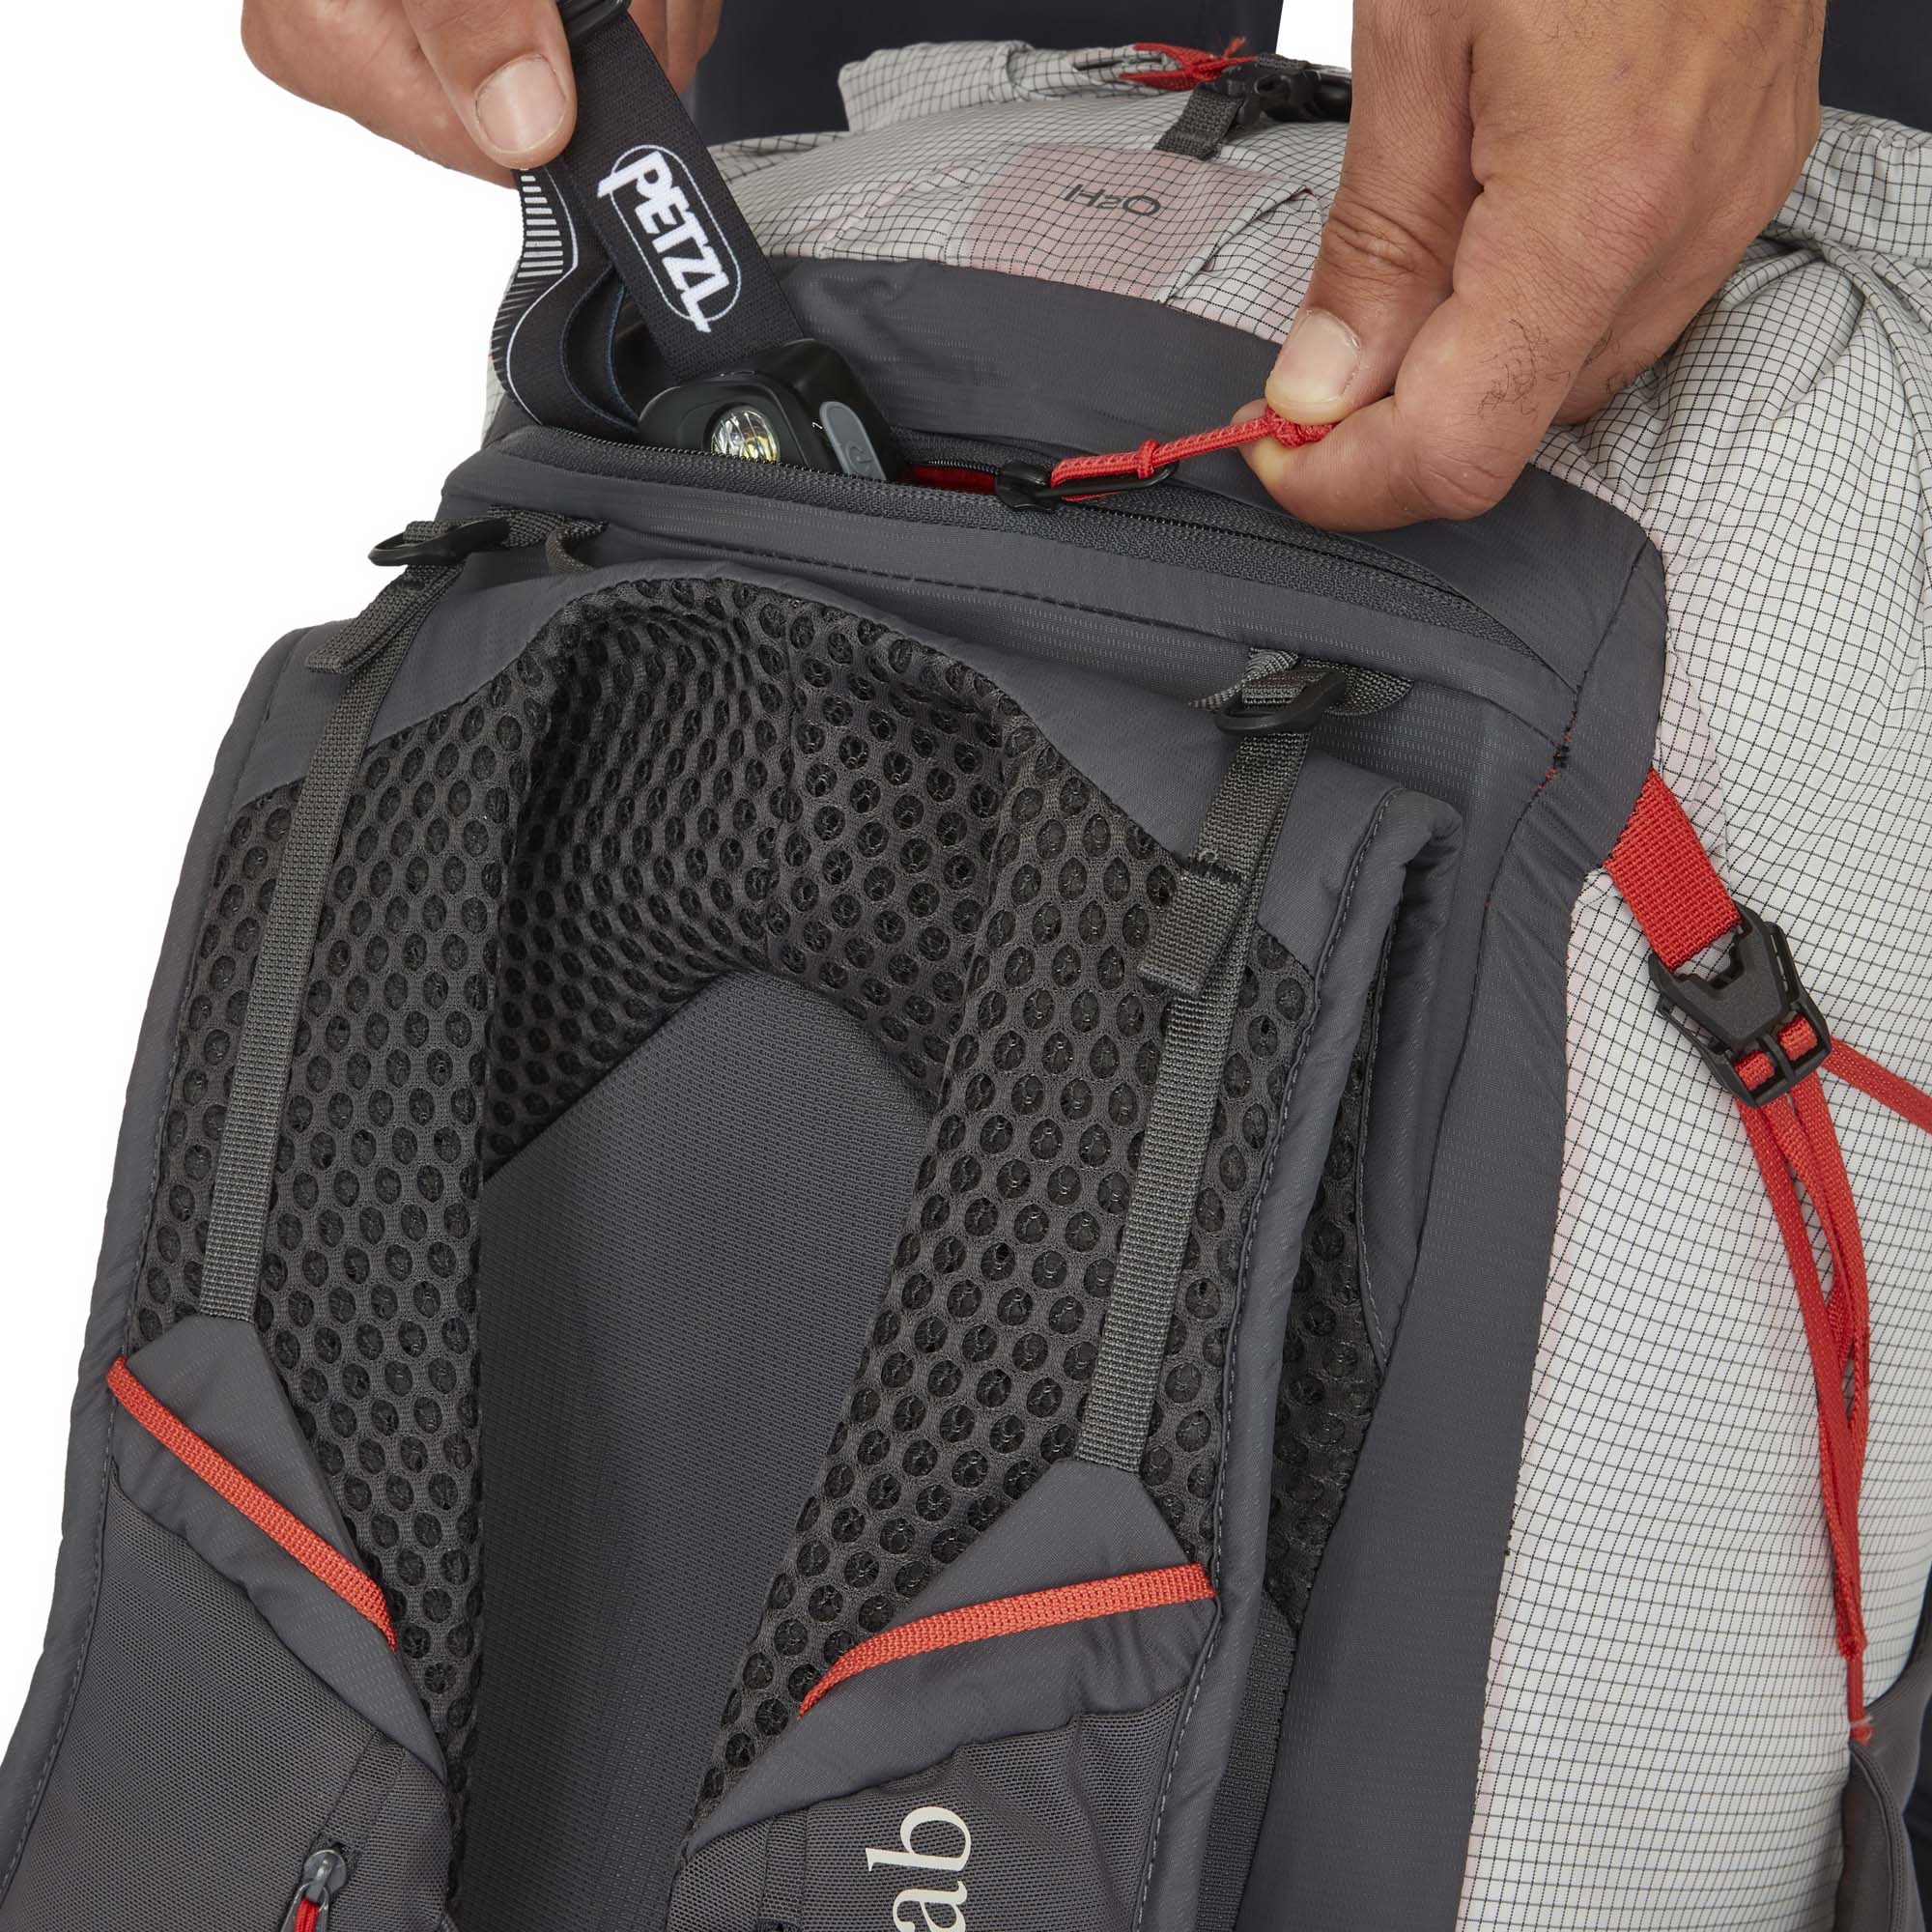 Rab Muon 40 Technical Trekking Backpack